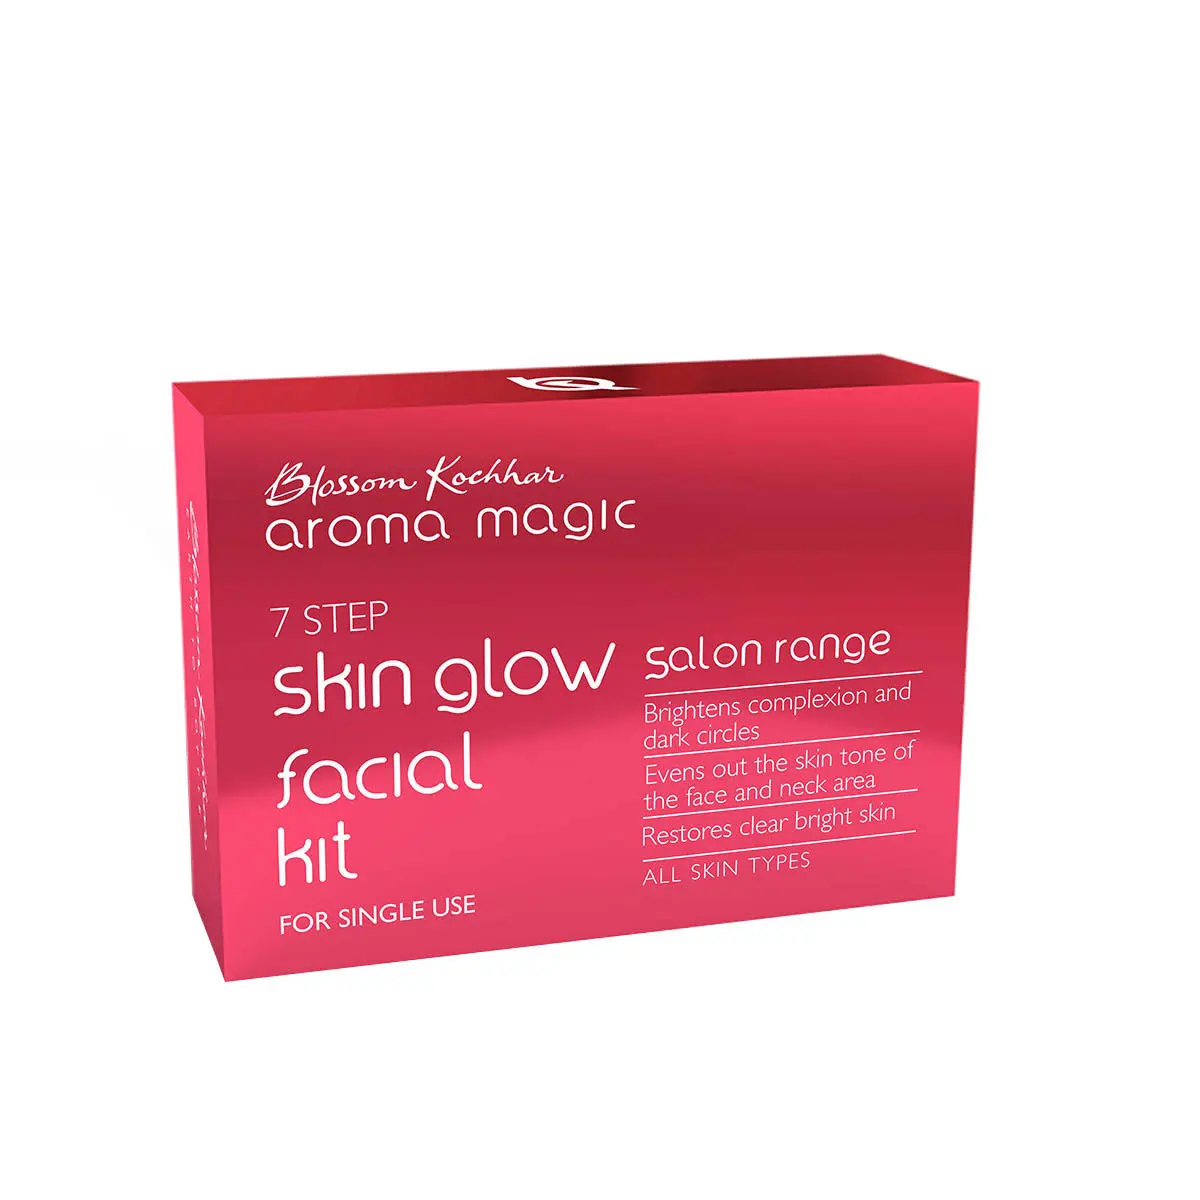 Aroma Magic Skin Glow Facial Kit - Single Use